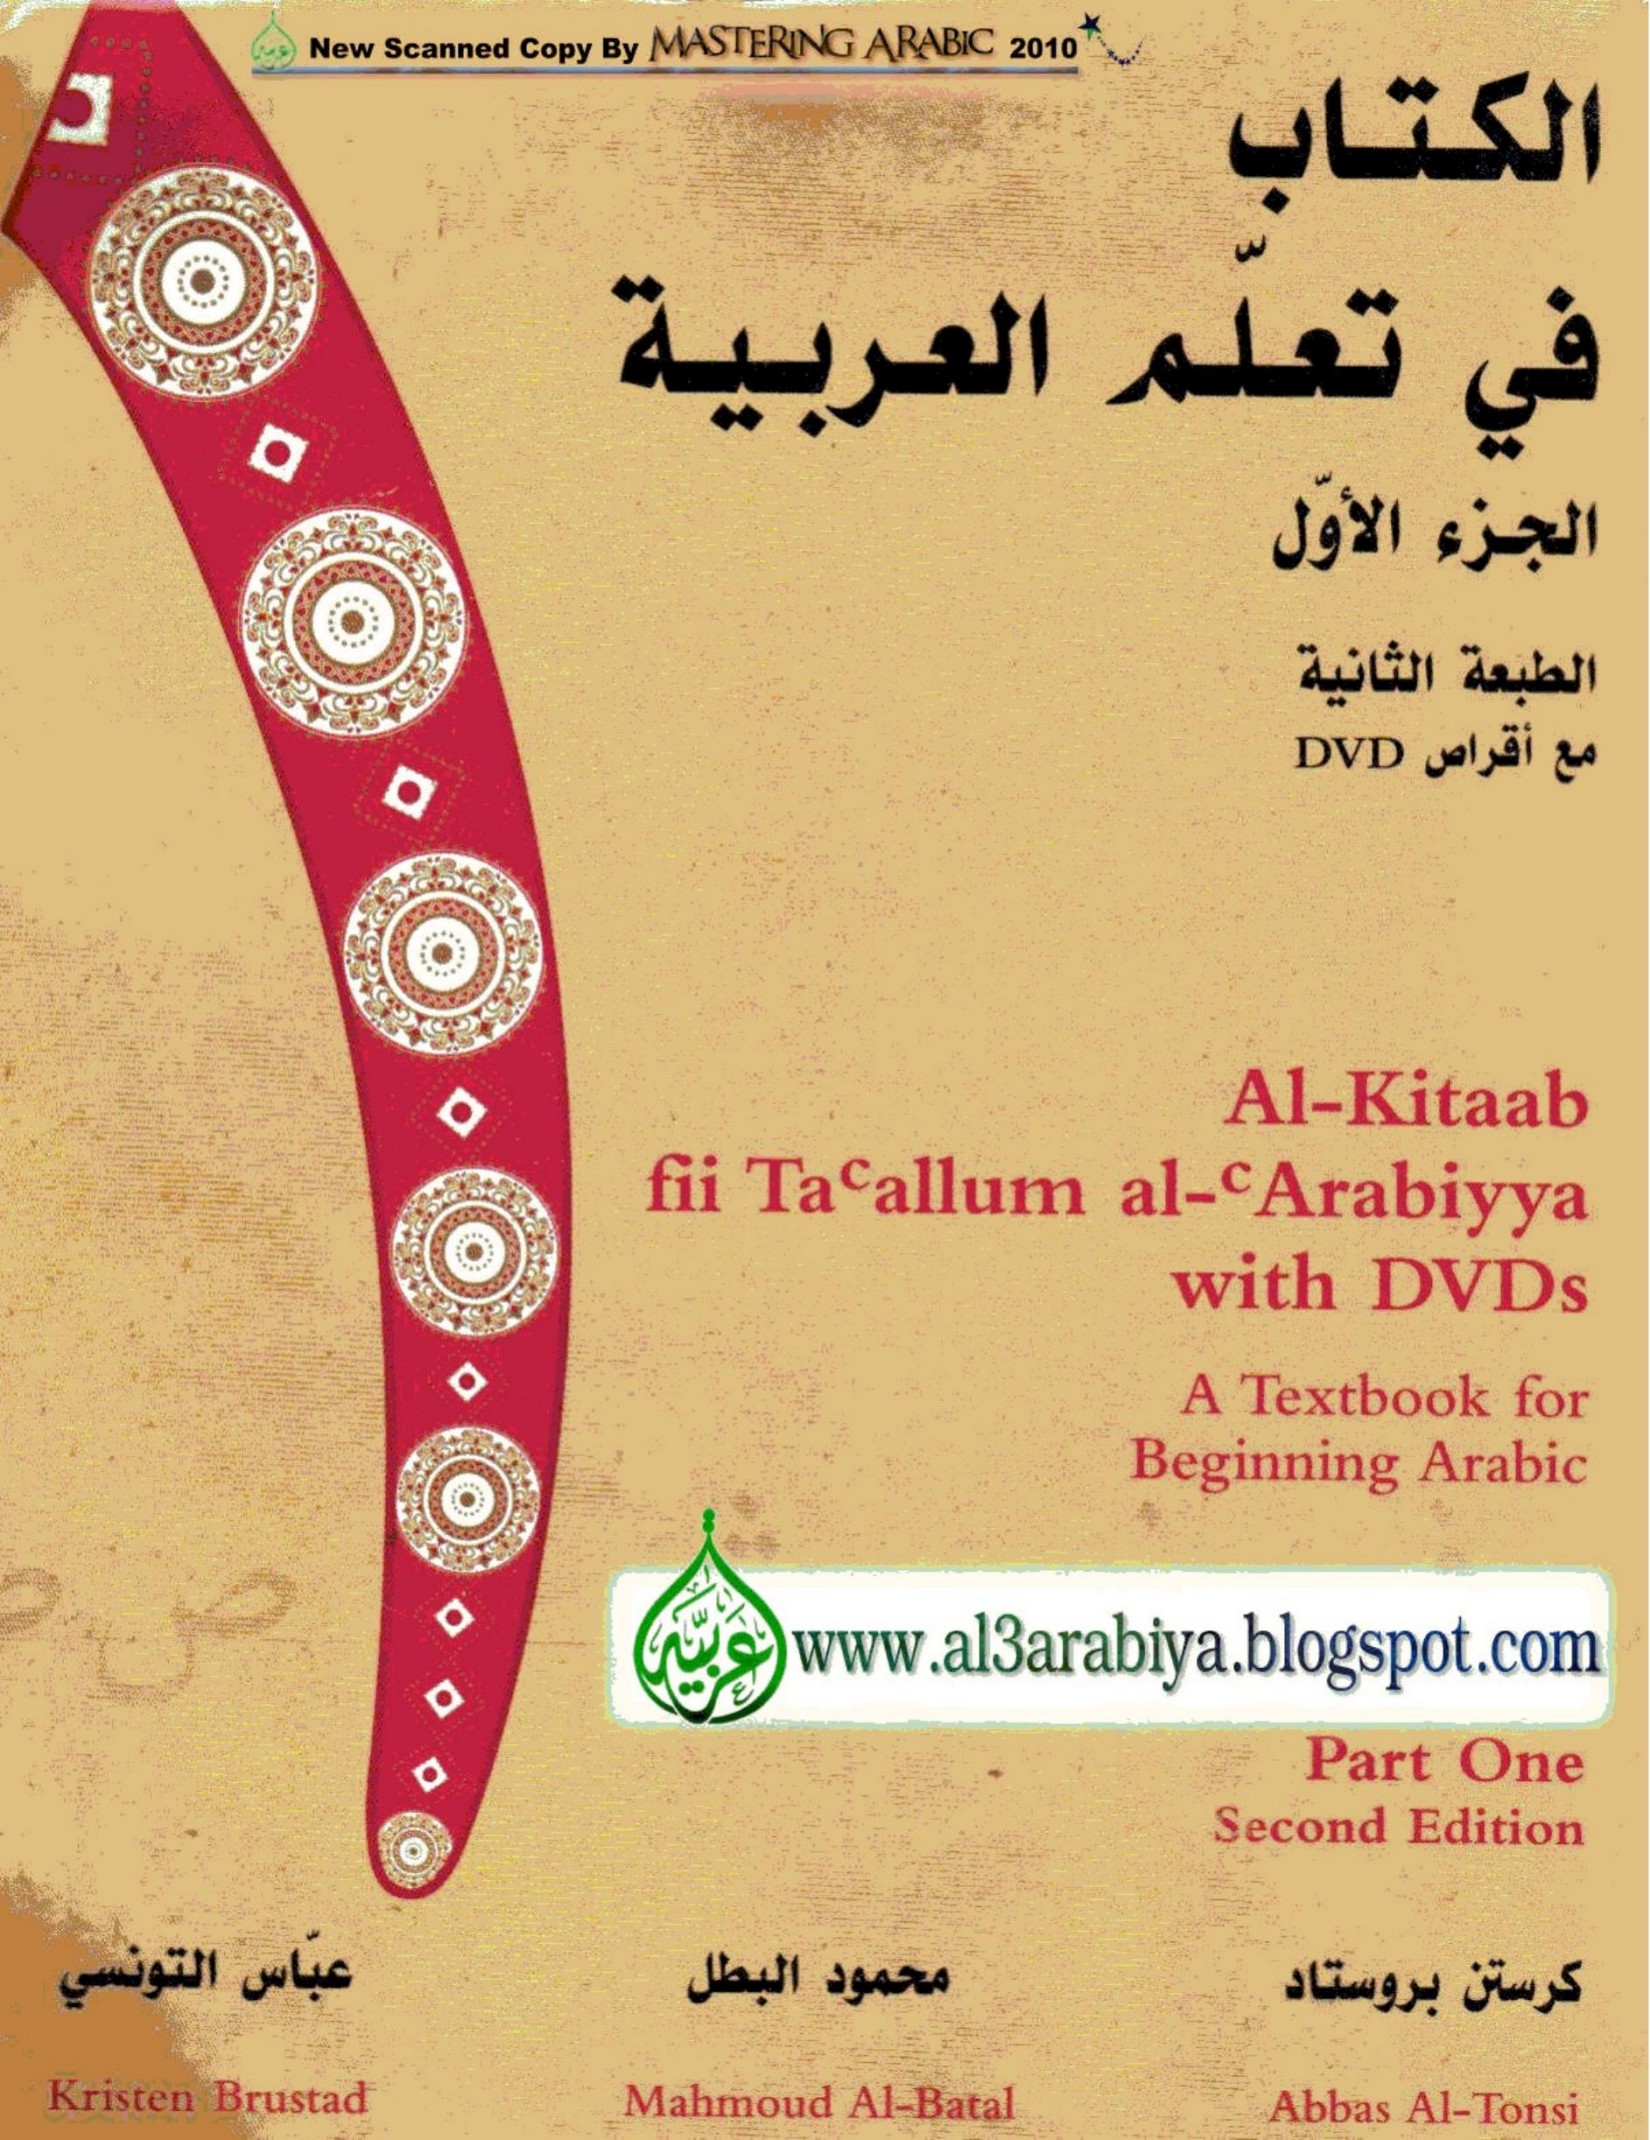 Al-Kitaab fii Ta'allum al-'Arabiyya with DVDs A Textbook for Beginning Arabic, 2004